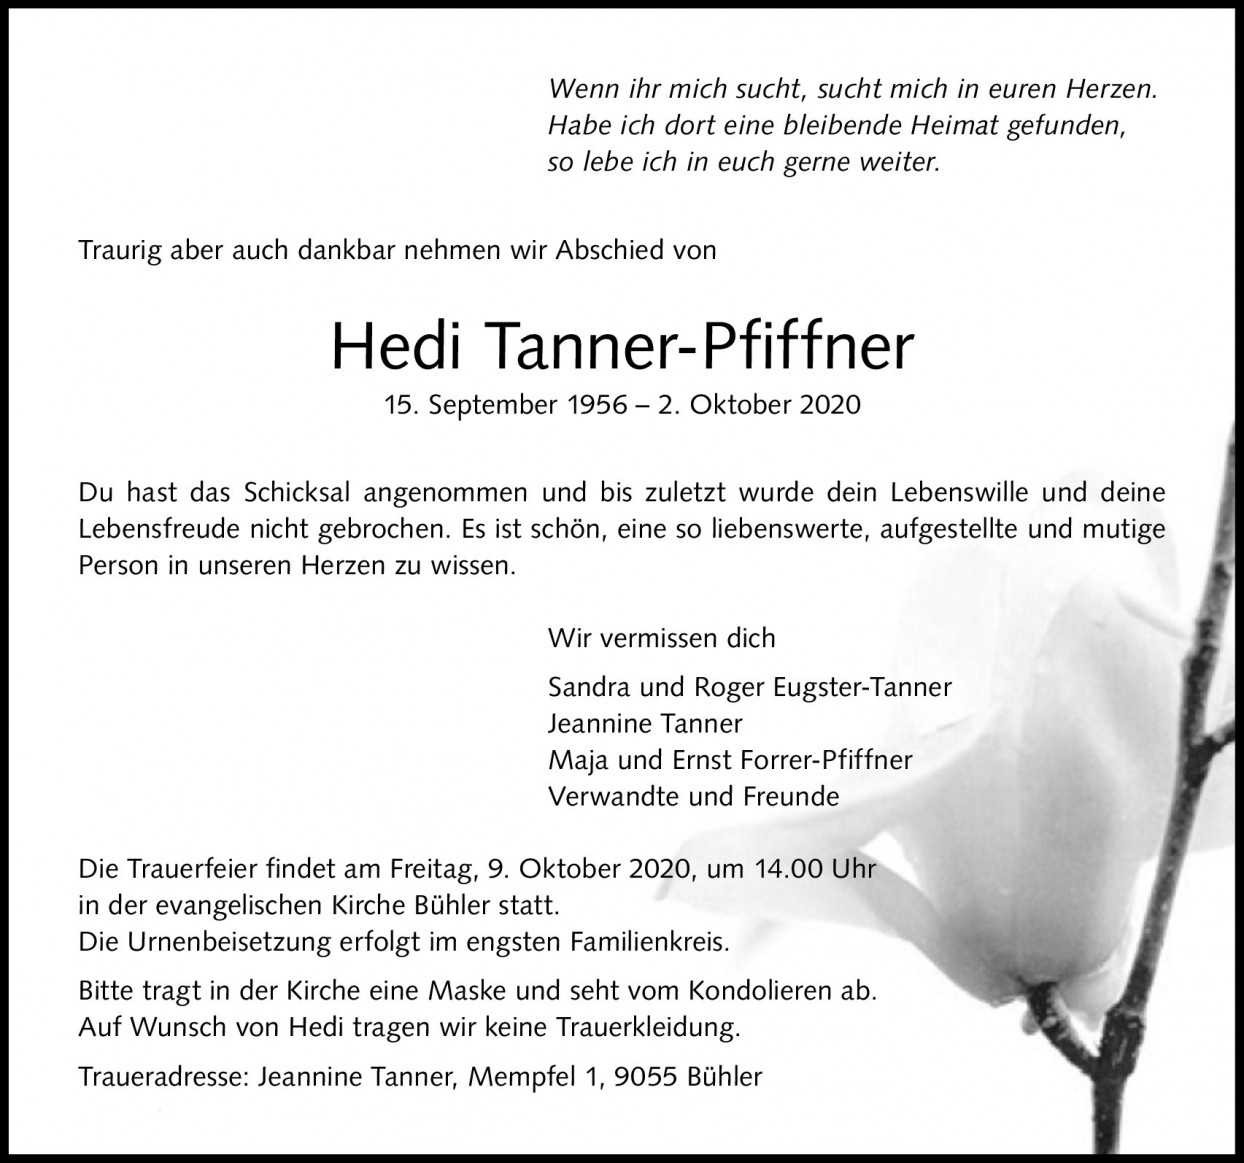 Hedi Tanner-Pfiffner